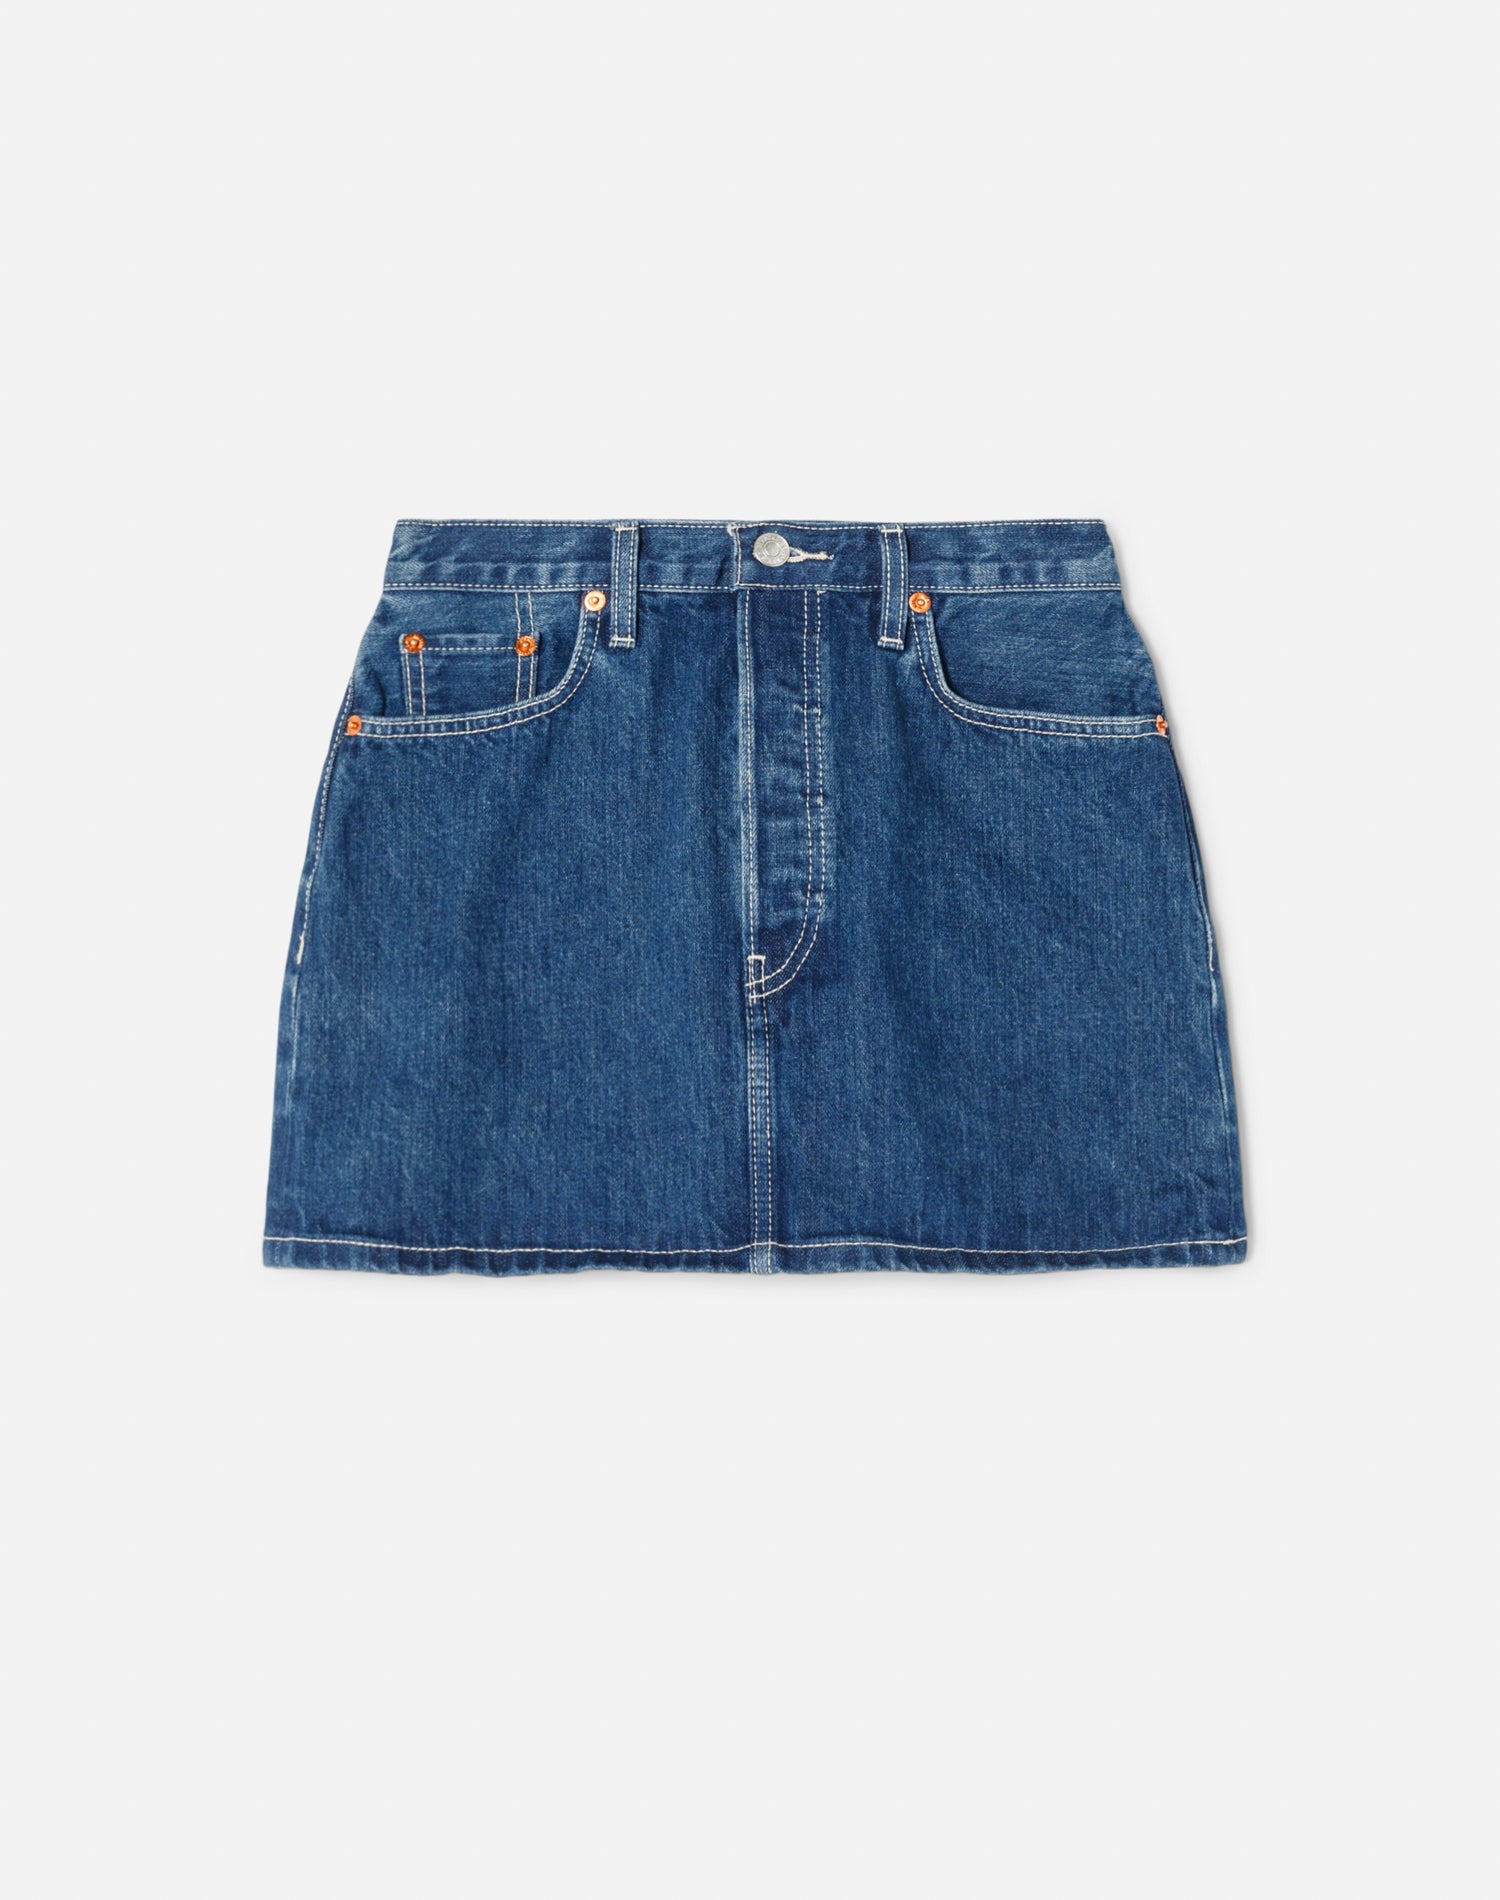 90s Mini Skirt - Iron Blue